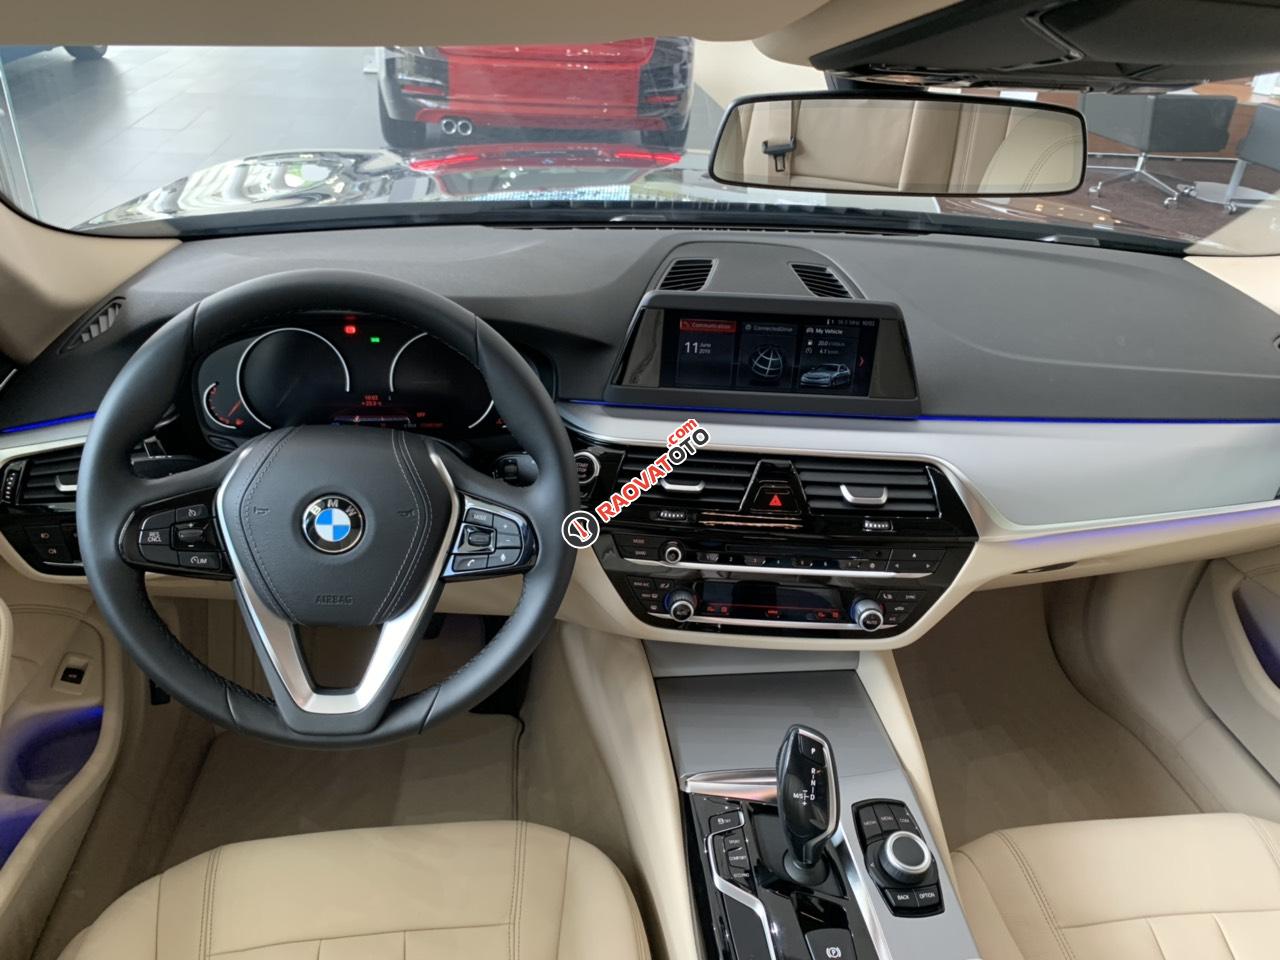 [BMW Quận 2] BMW 520i All new, giảm tiền mặt, bảo hiểm vật chất, bảo dưỡng. Hotline PKD 0908 526 727-7